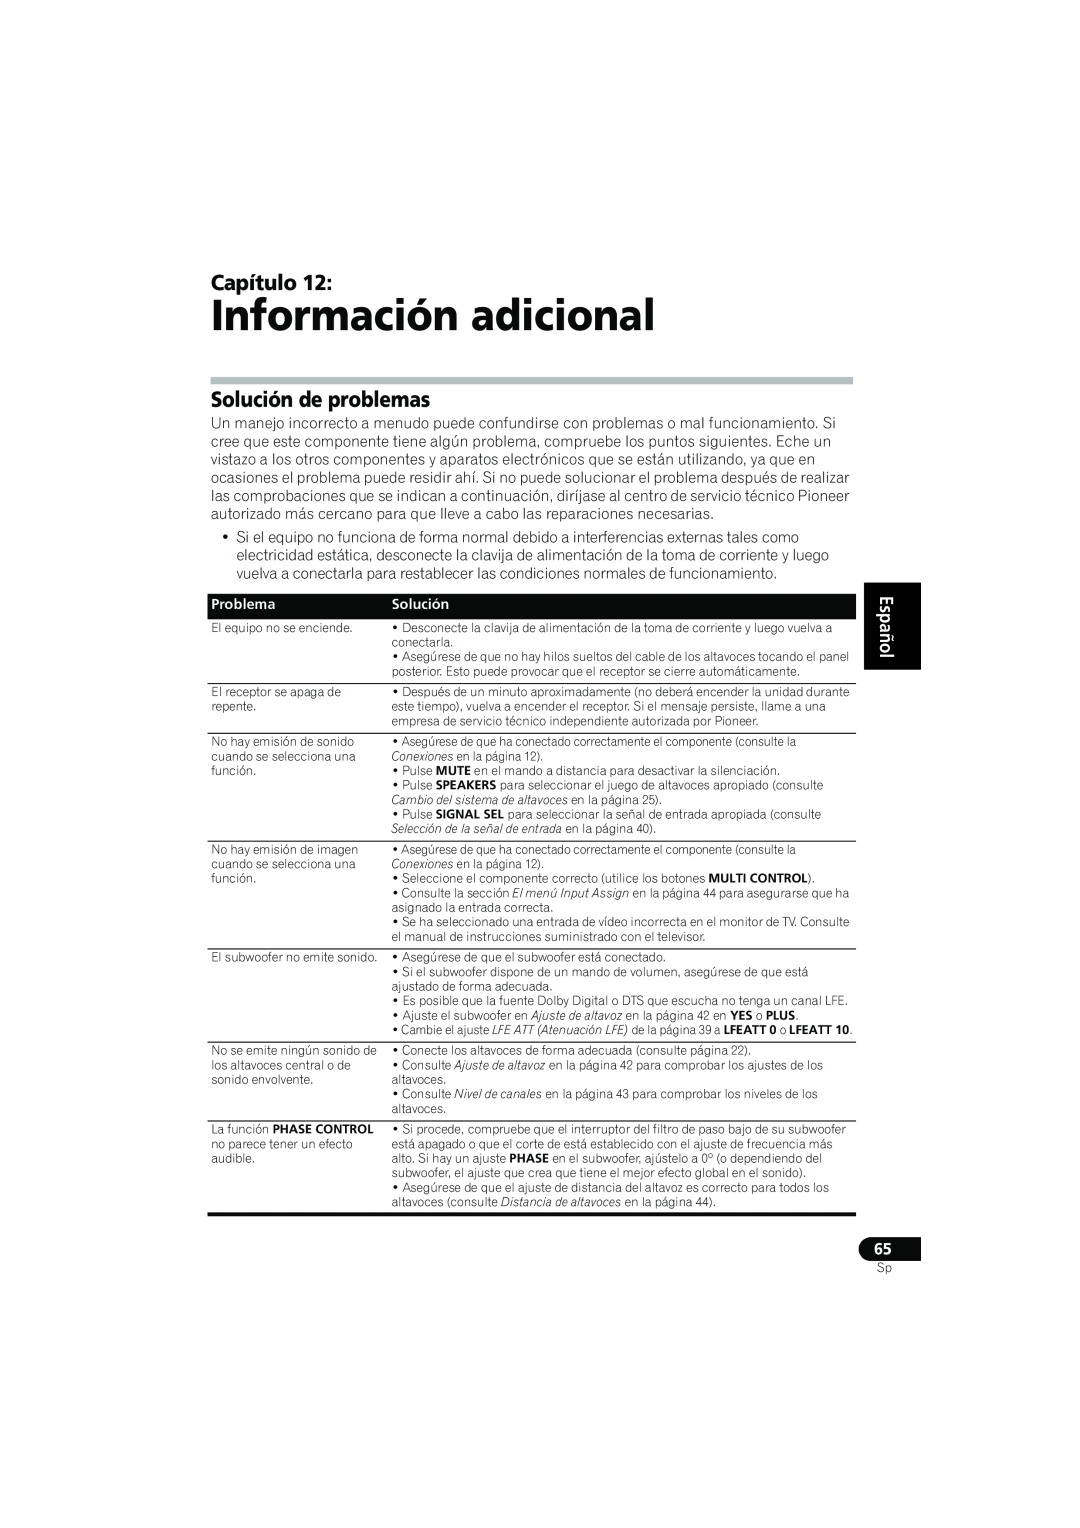 Pioneer VSX-819H-K manual Información adicional, Solución de problemas, Problema, Capítulo, English Français Español 65 